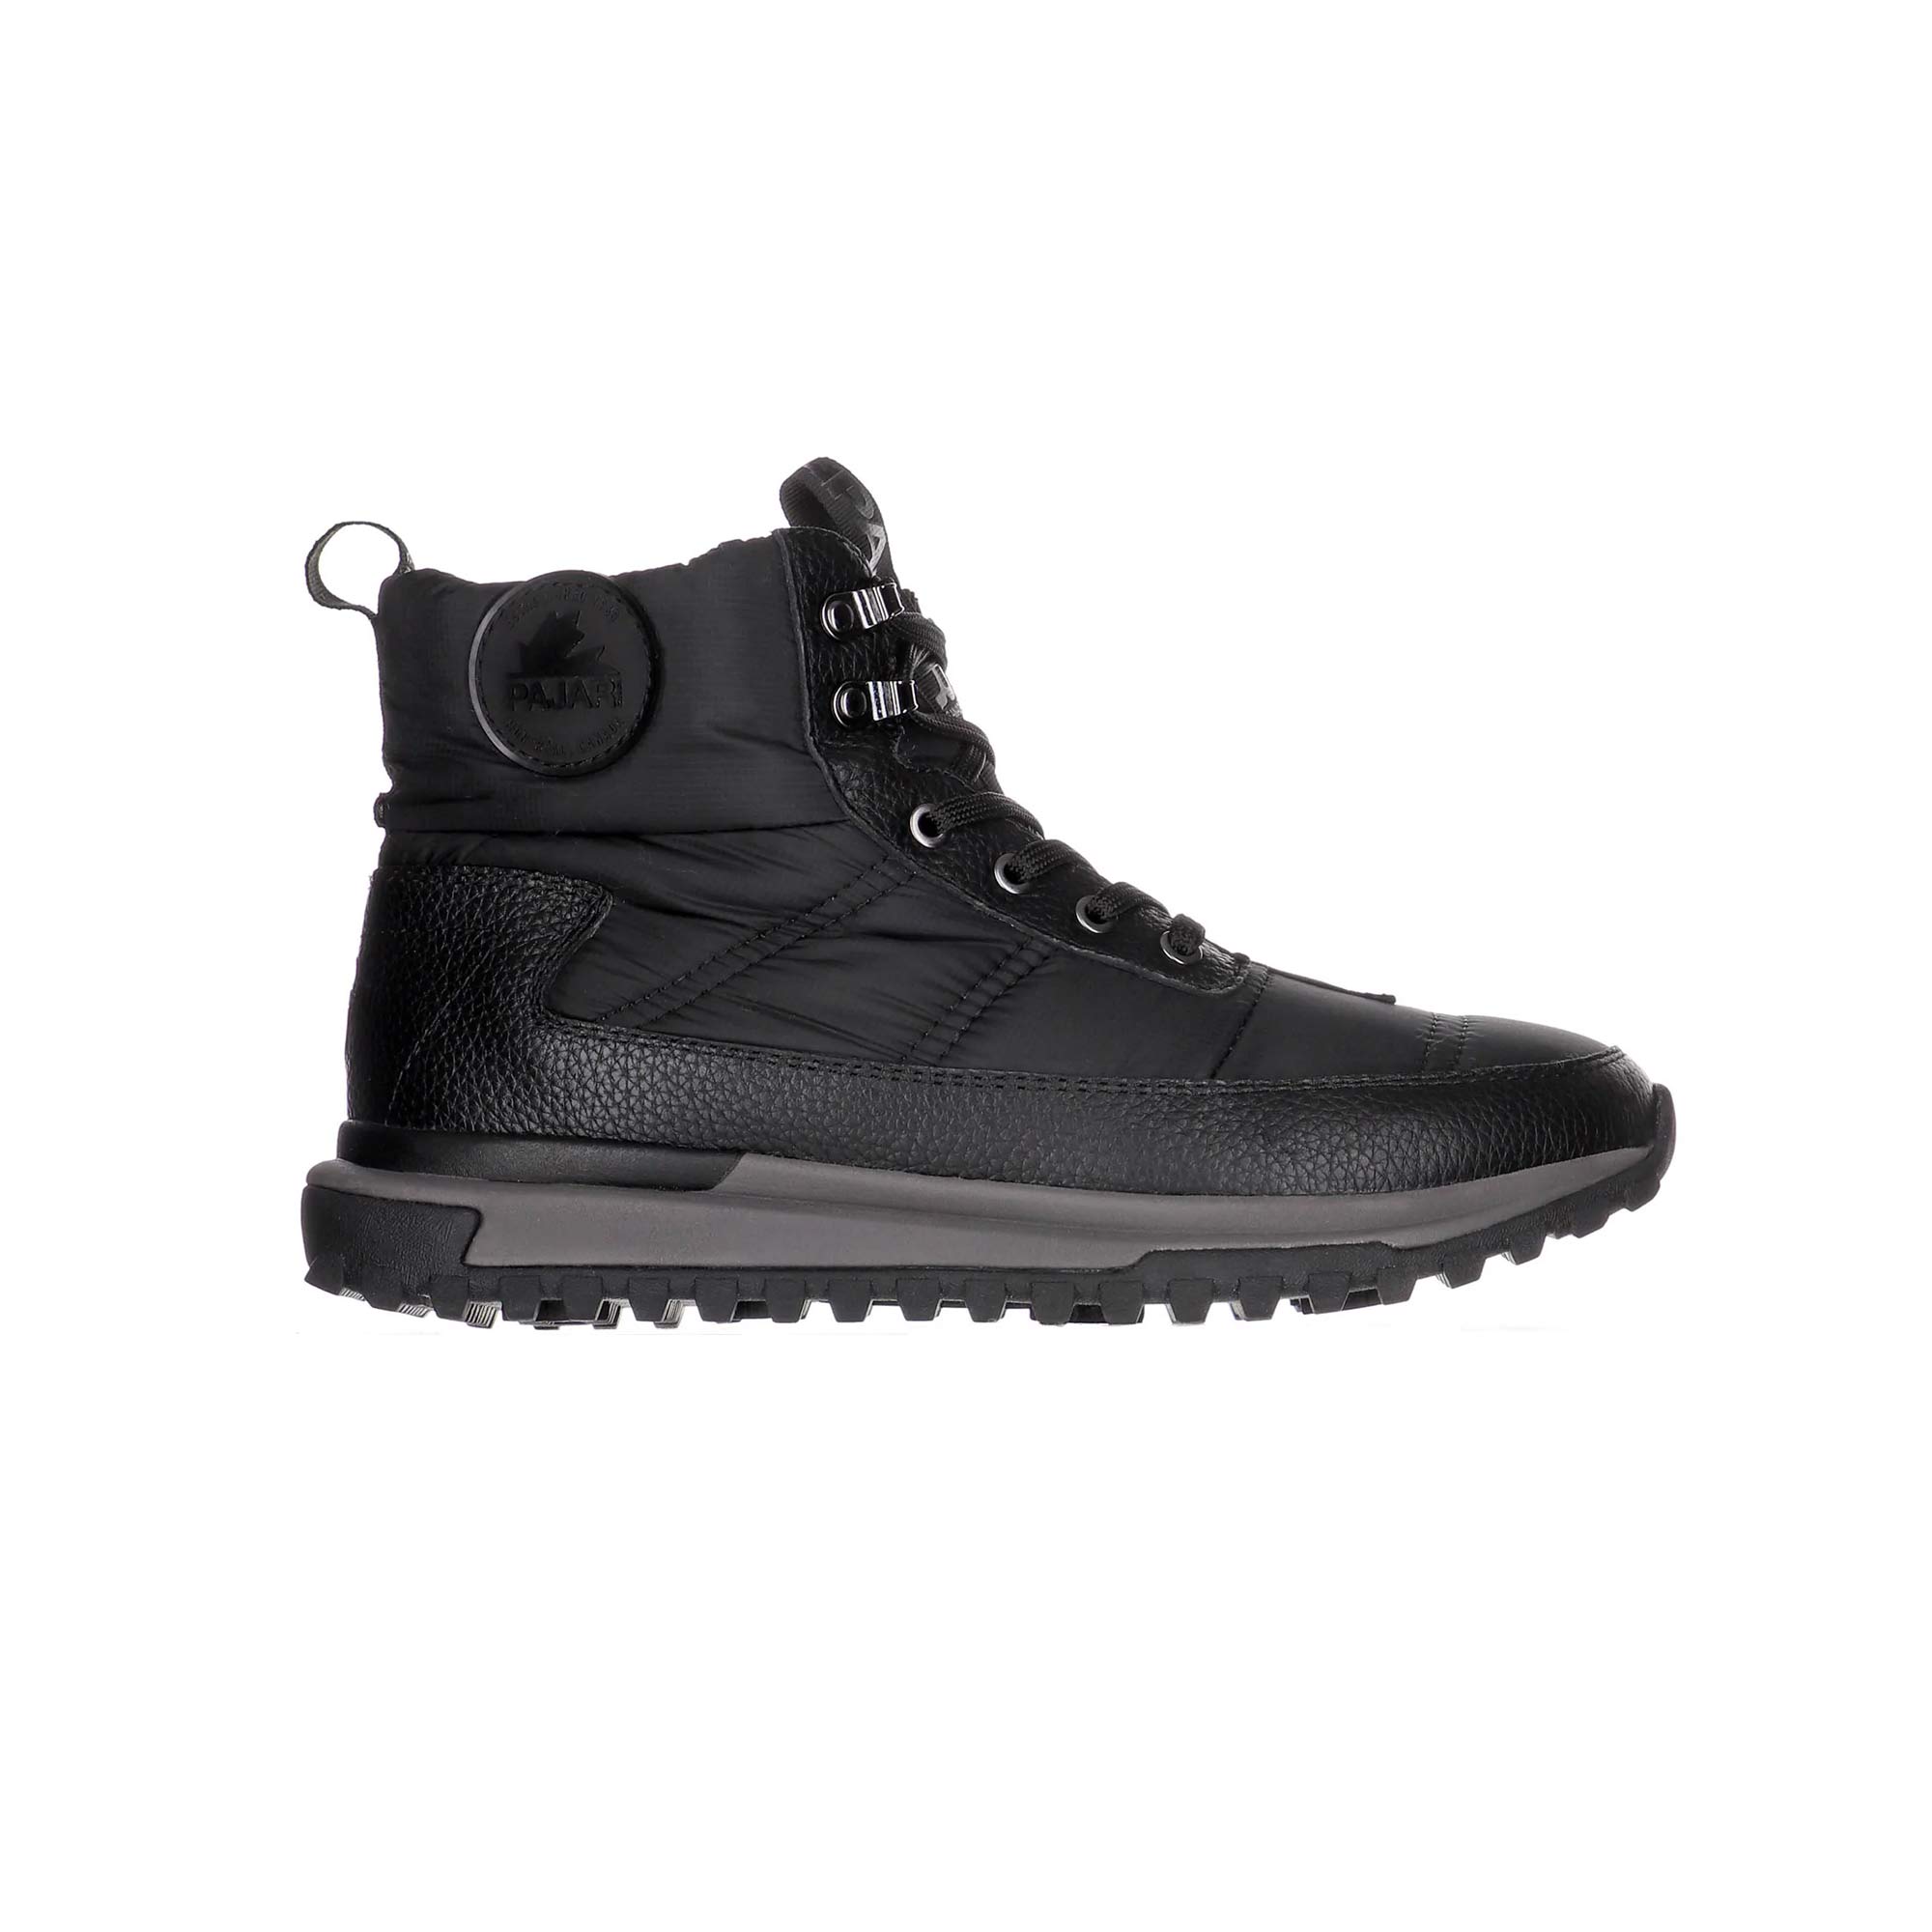 Sneaker 71 | Mens Boots in Black on Vibram Sole | Grenson